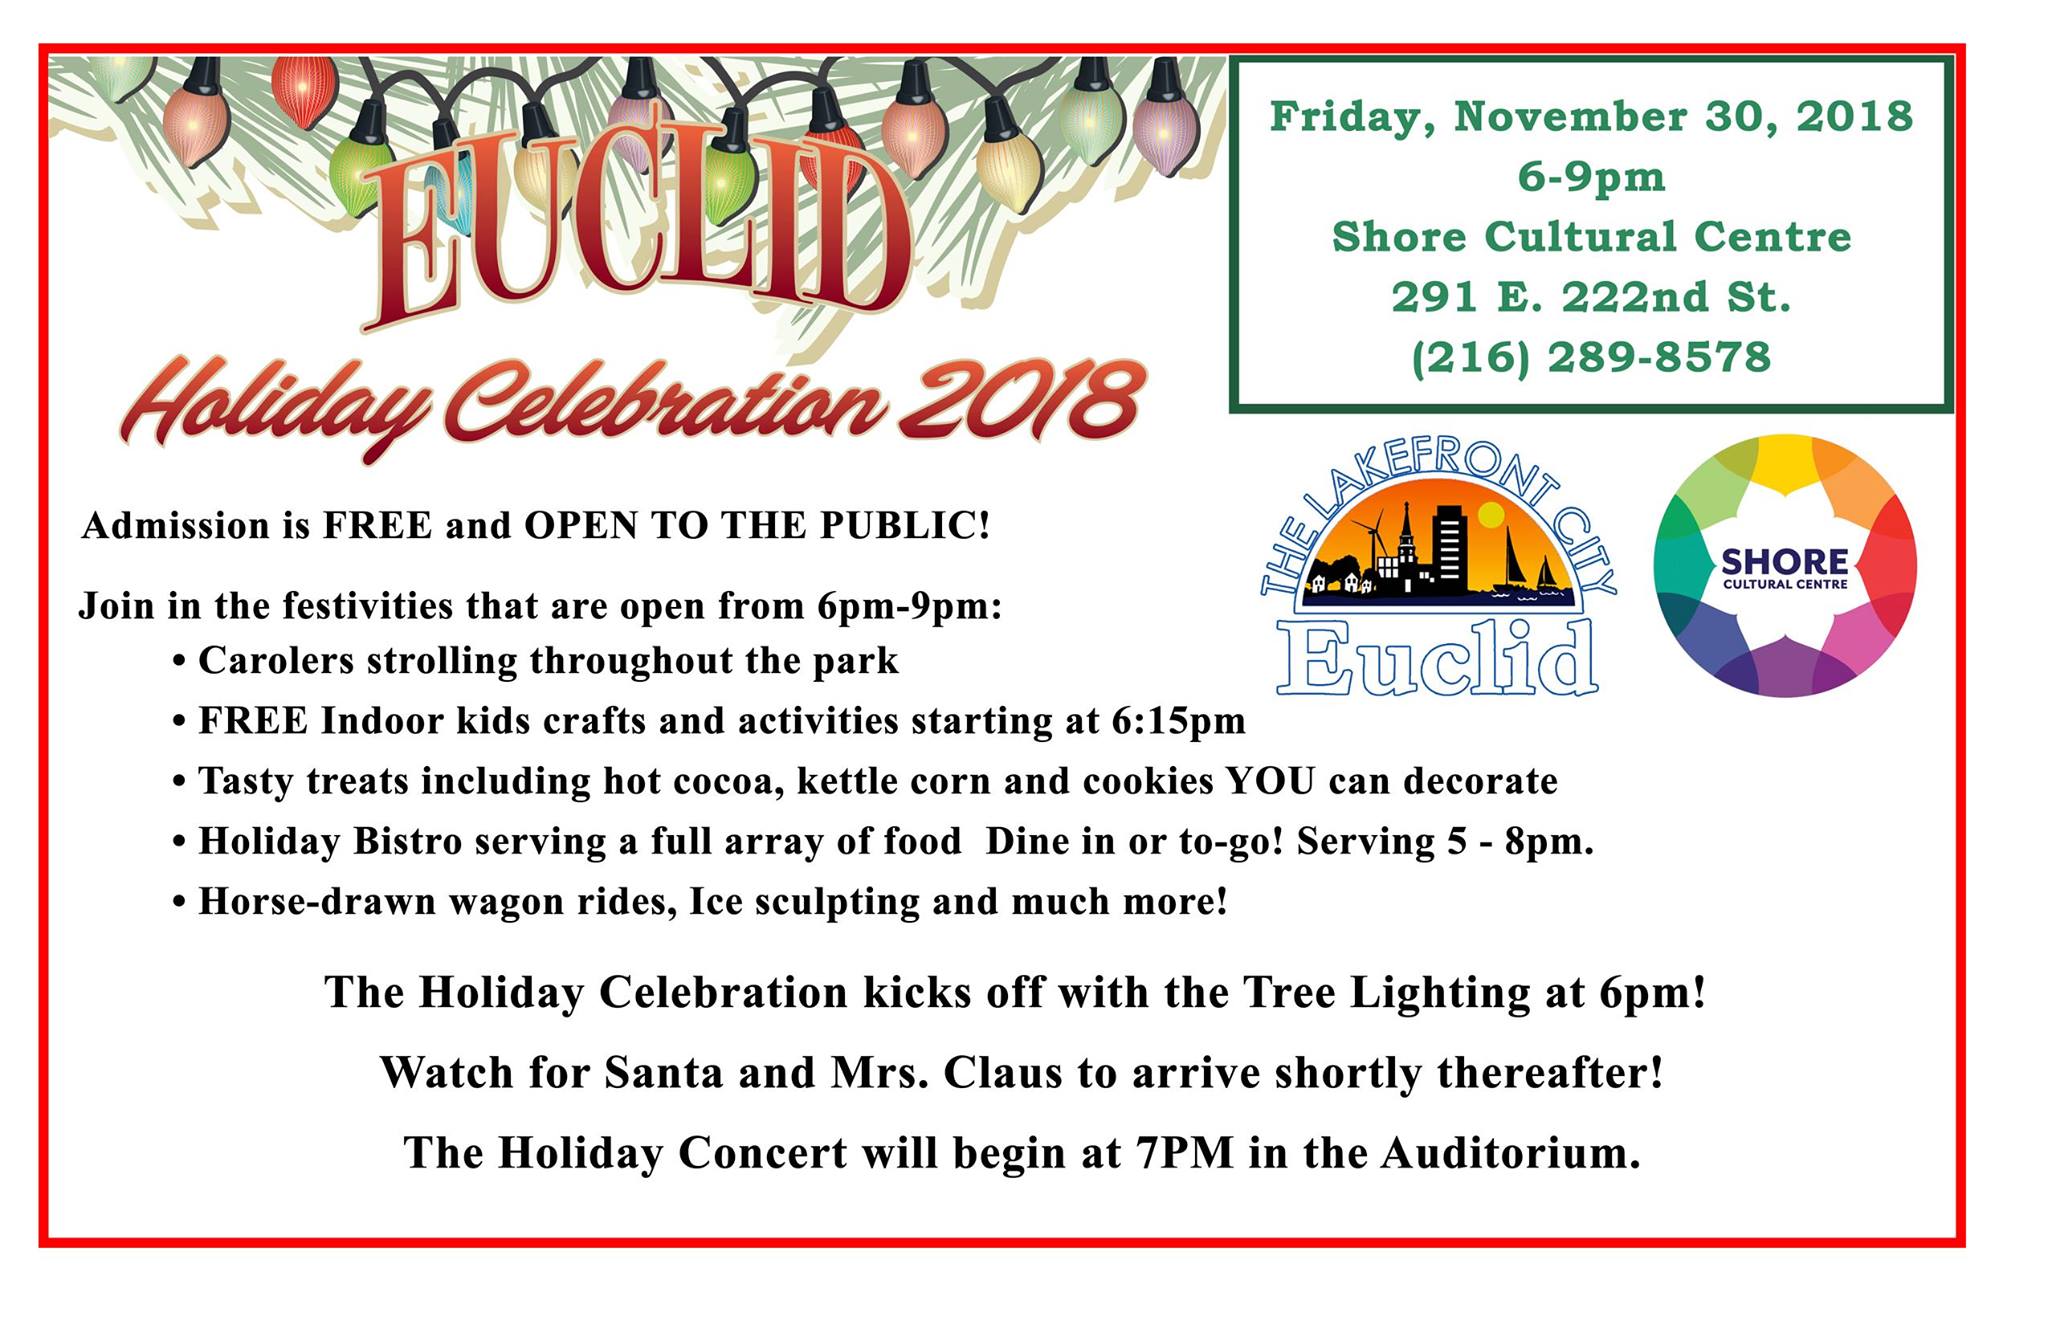 Euclid Holiday Celebration and Tree Lighting Ceremony Cover Photo